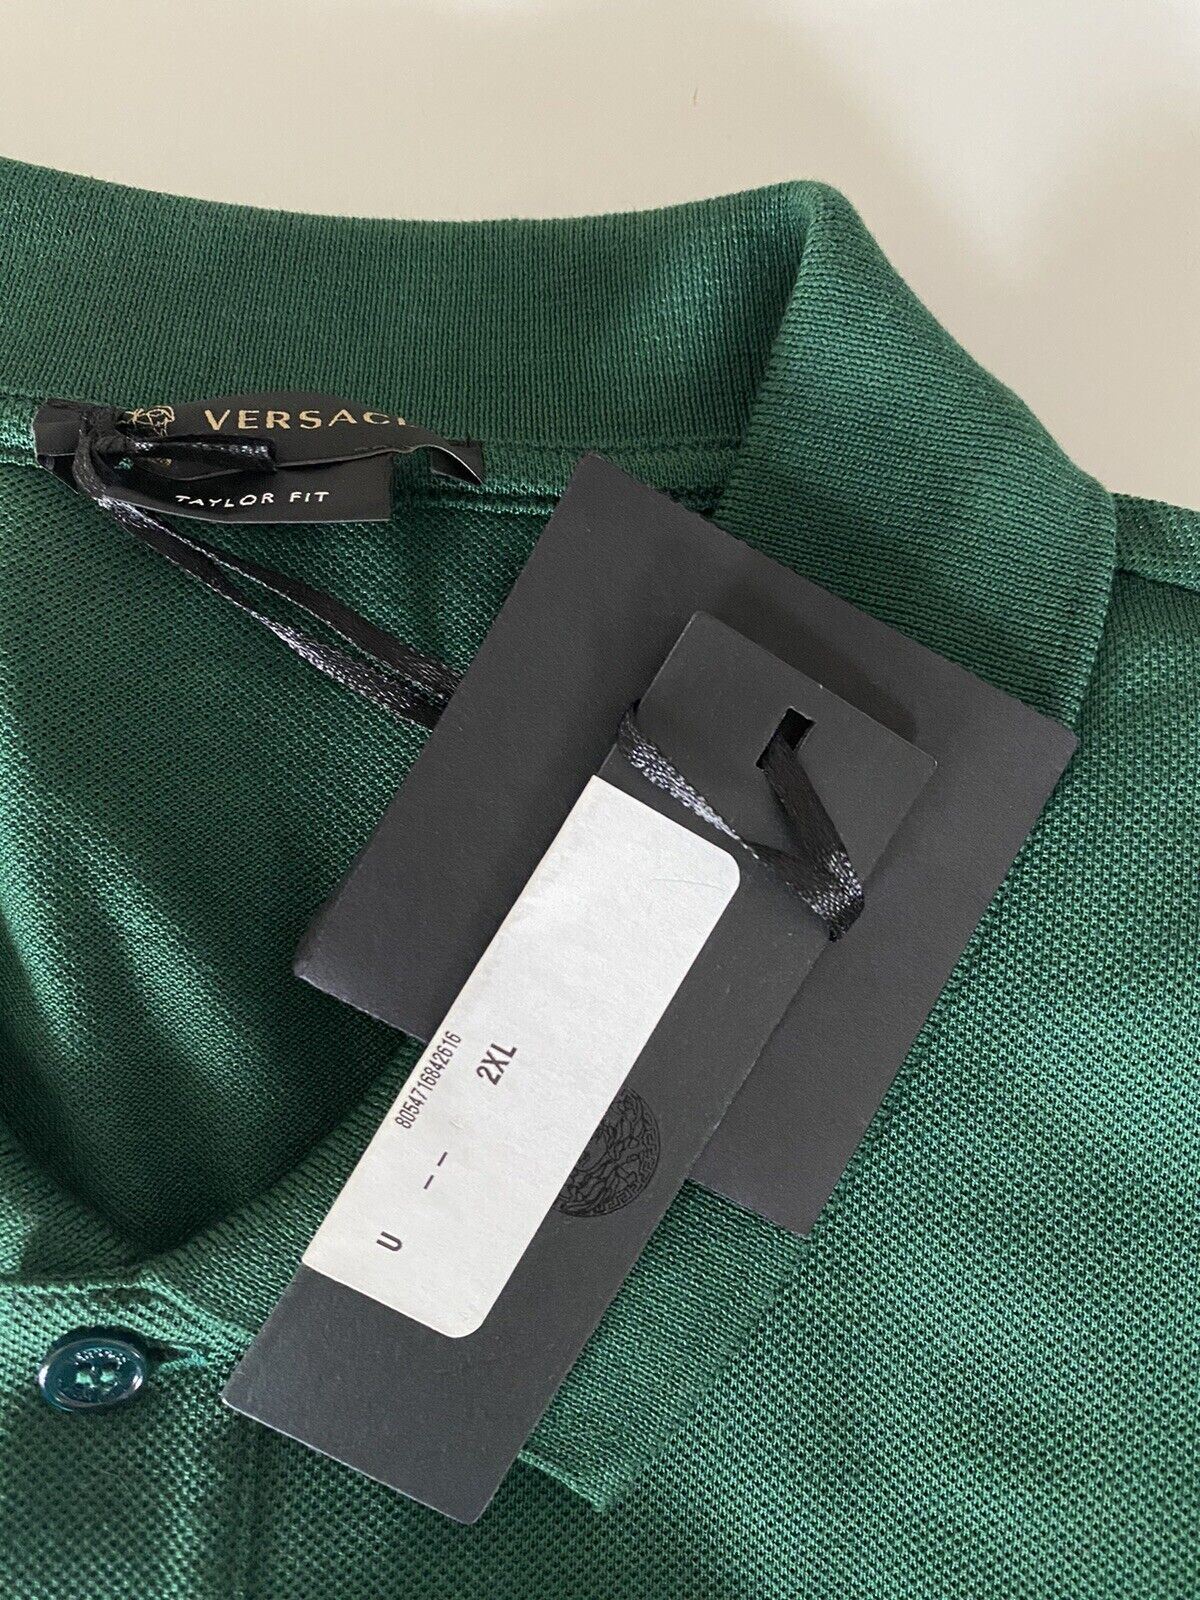 Neu mit Etikett: 650 $ Versace Blau gestreiftes maßgeschneidertes Baumwoll-Poloshirt 2XL A84992 Italien